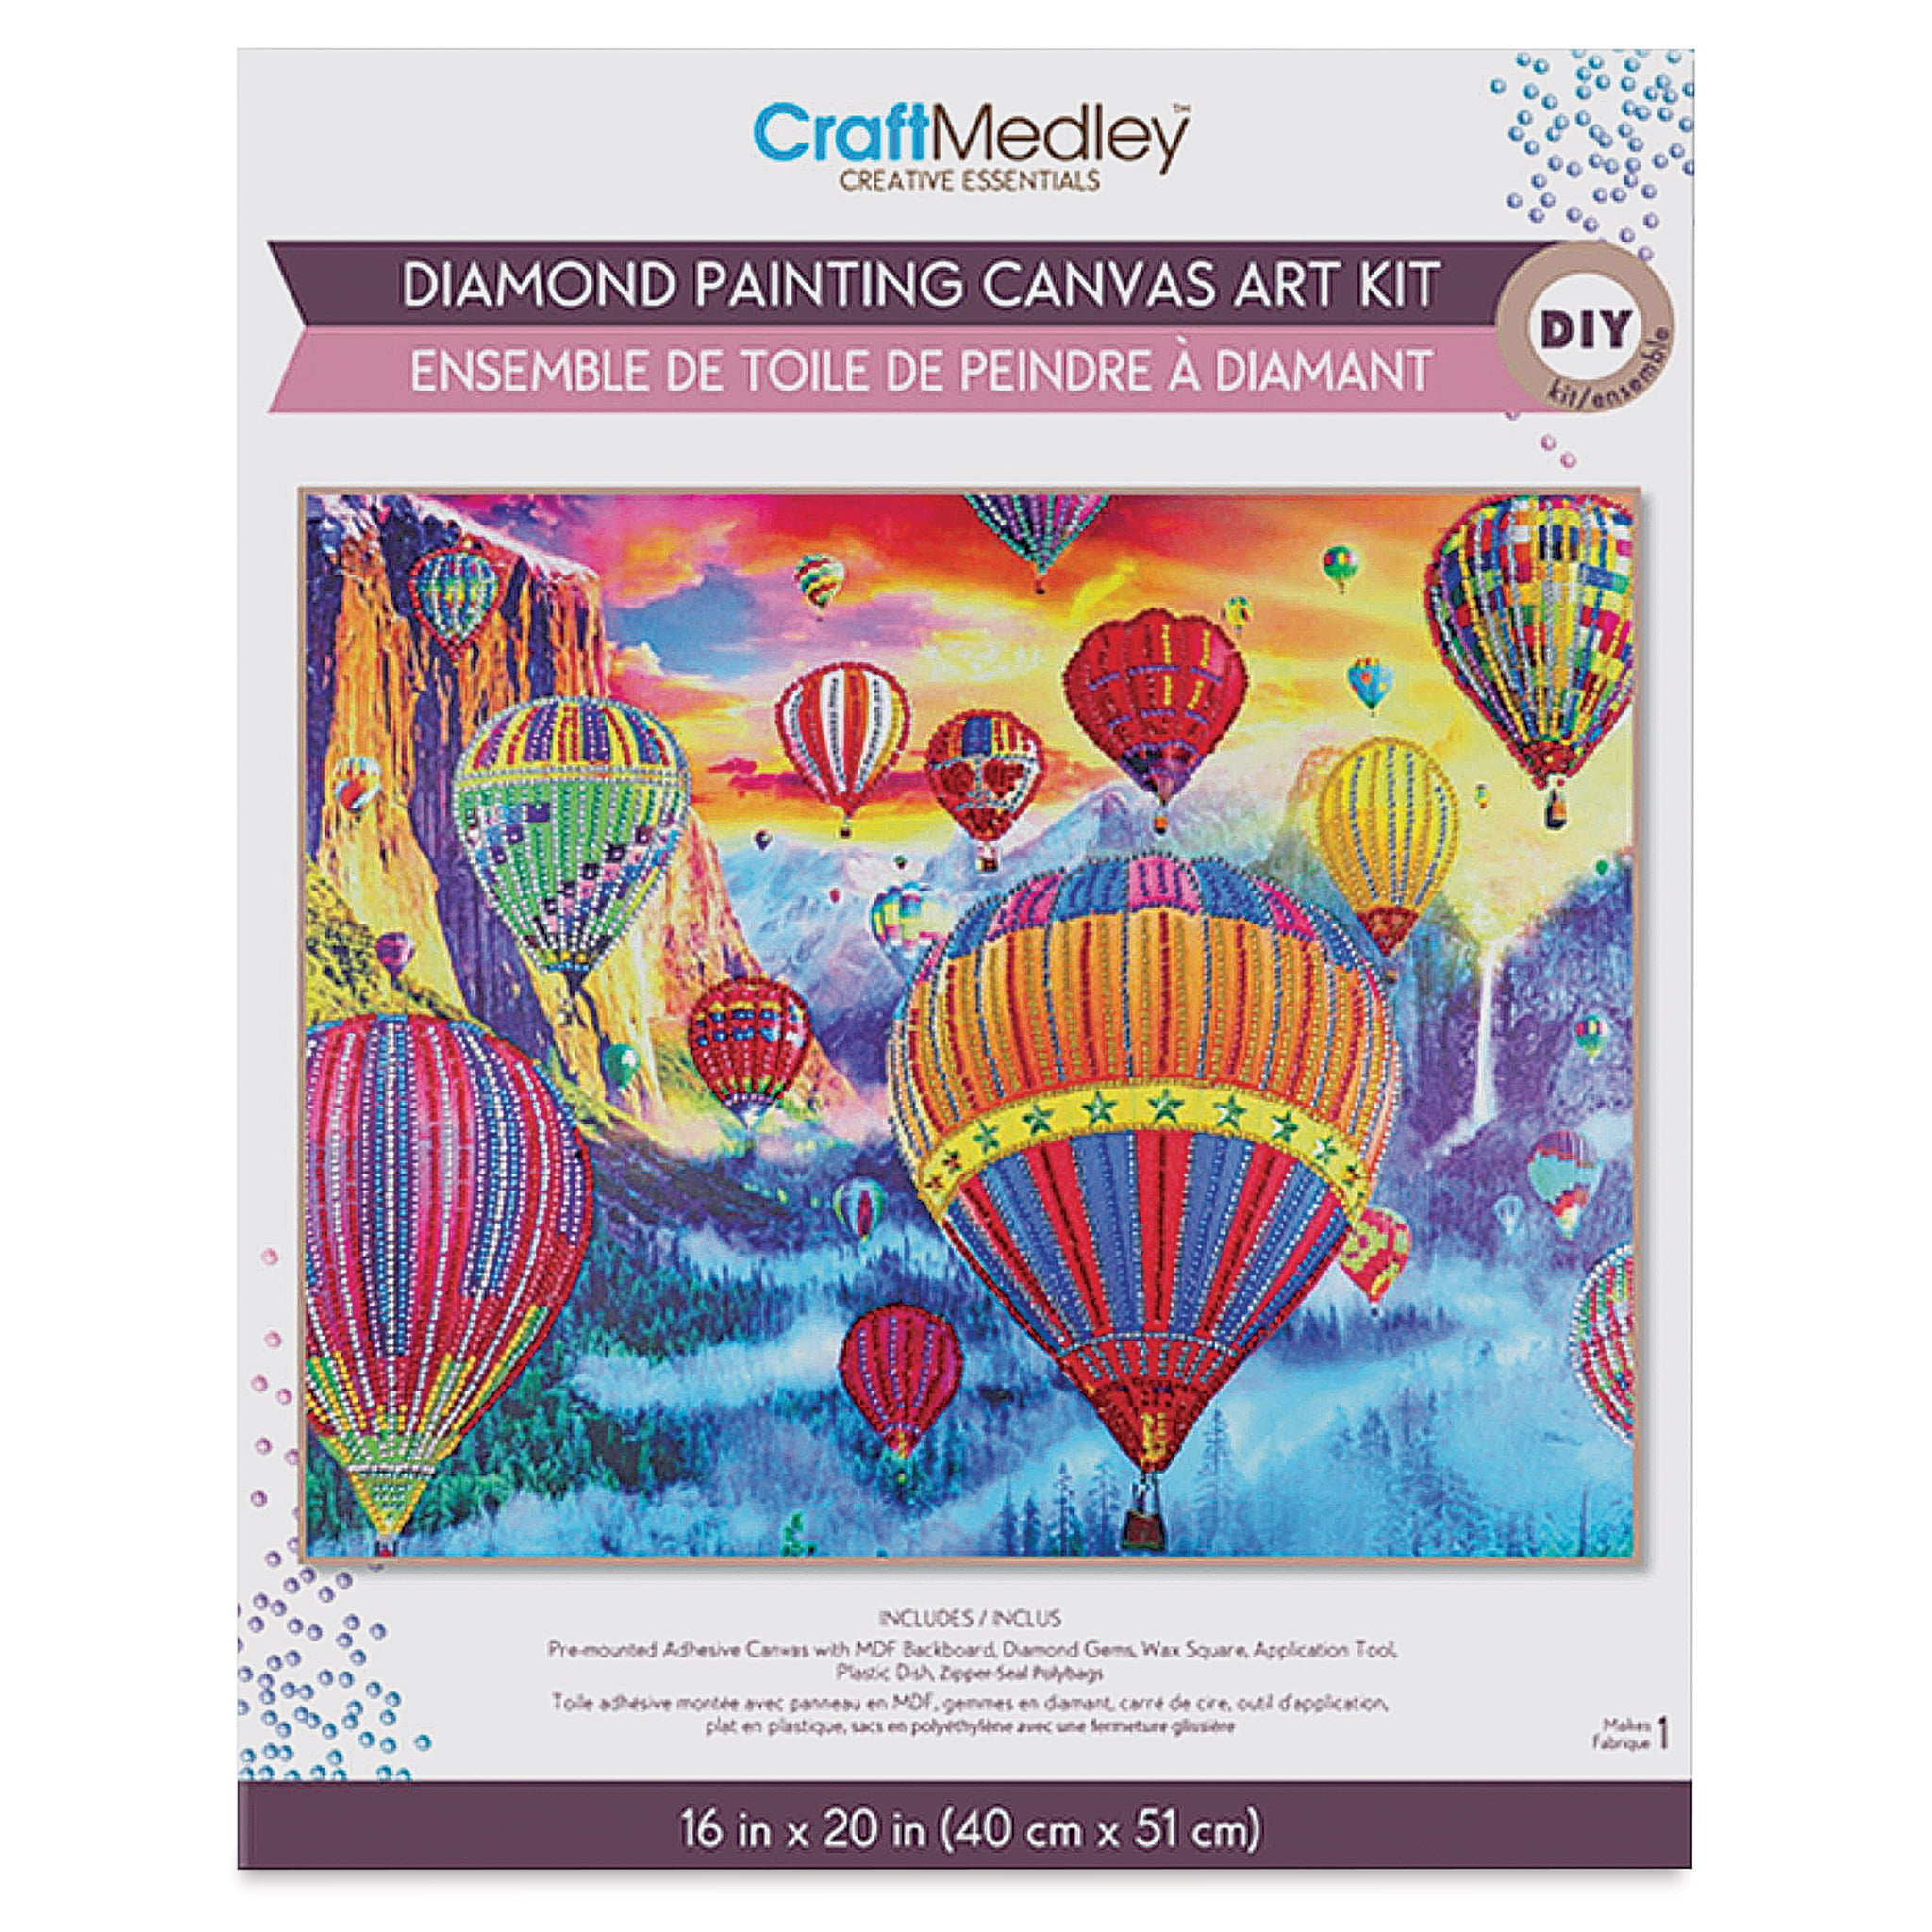 Craft Medley - Diamond painting canvas art kit, 12x16 - Dream catcher